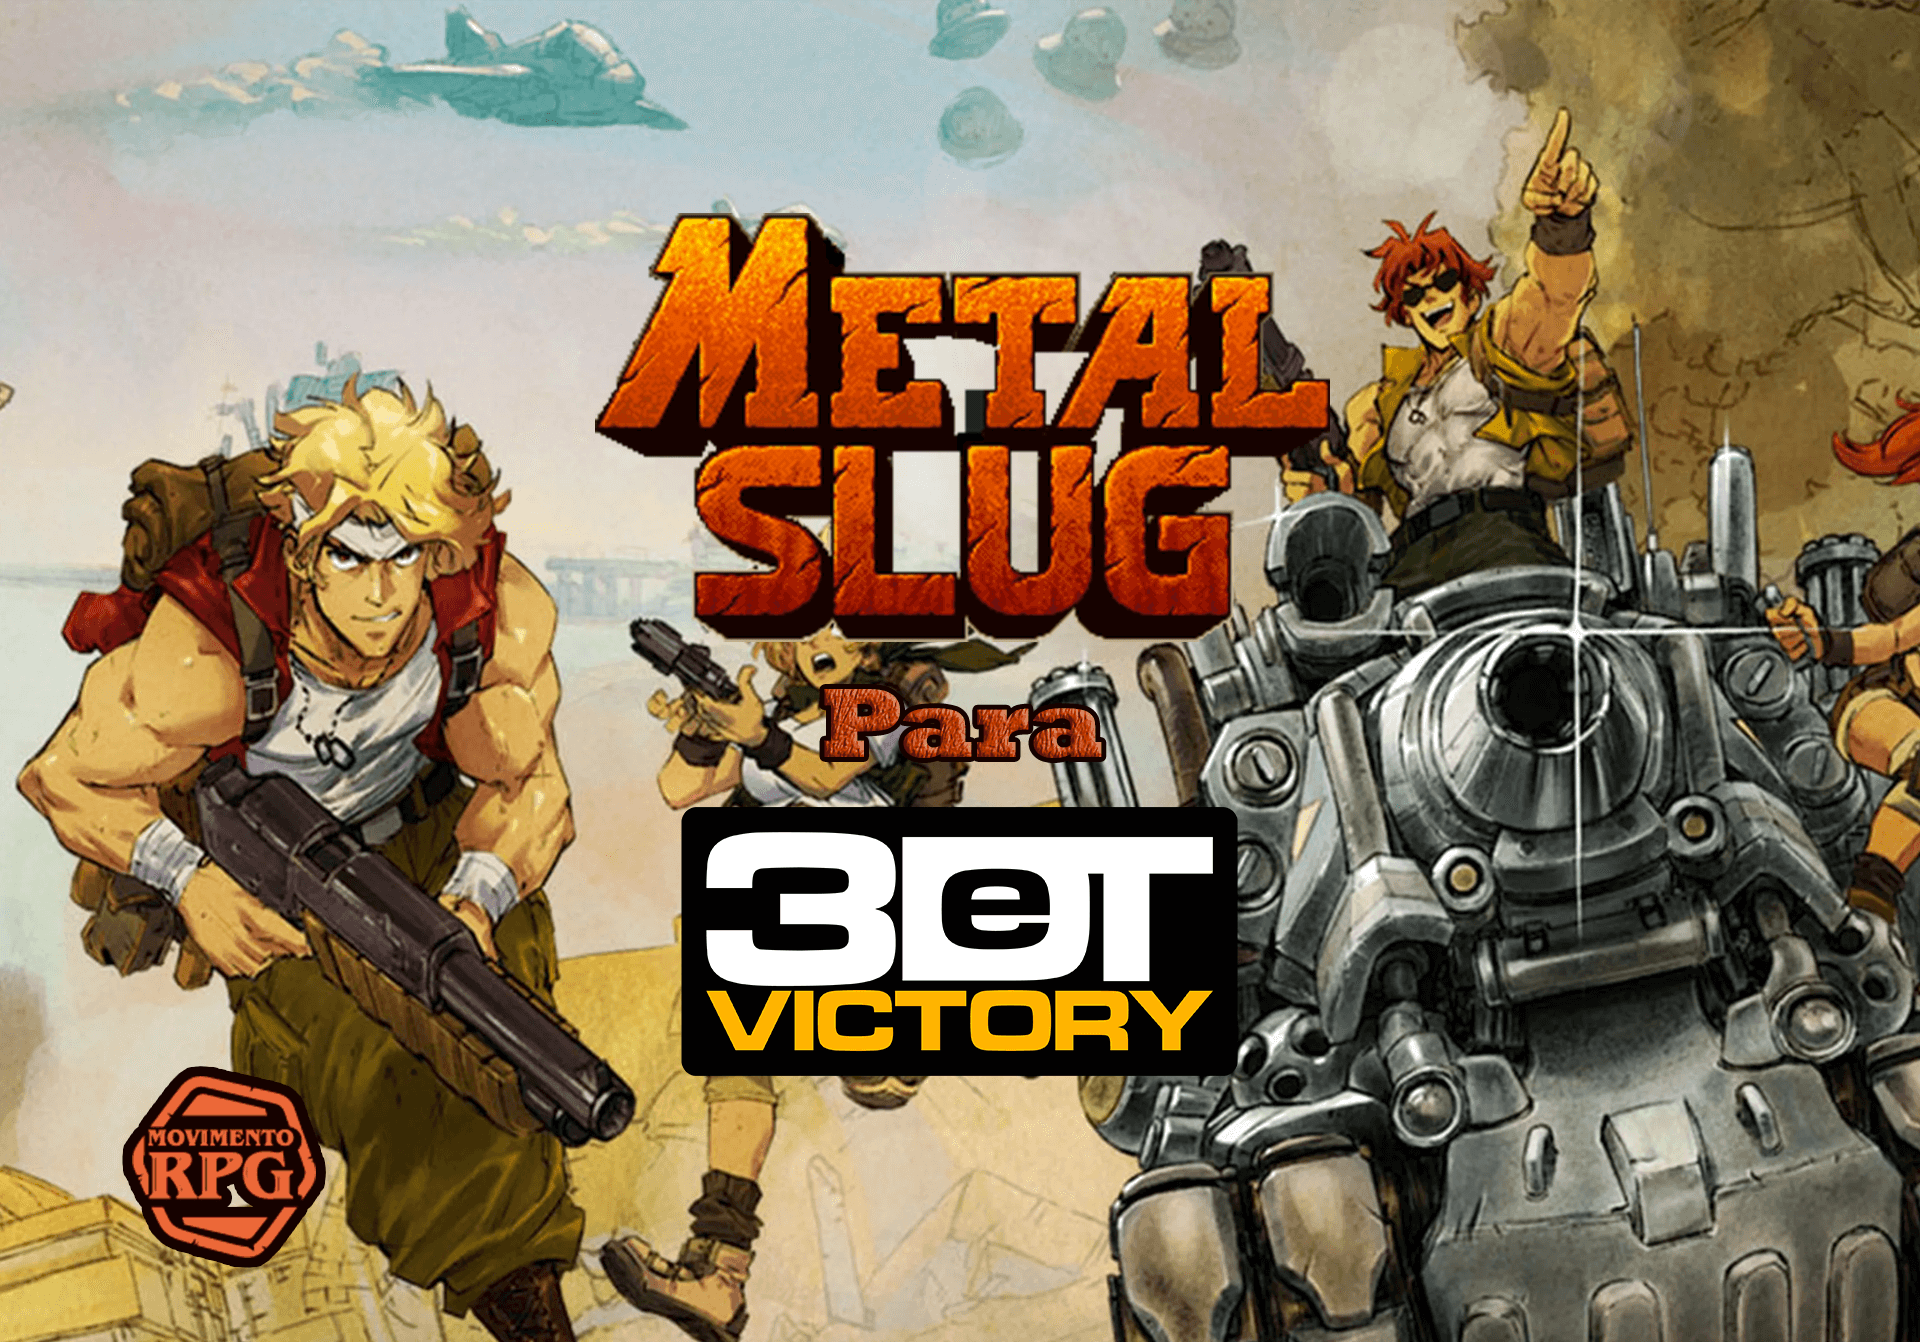 Metal Slug: Super Vehicle-001 para 3DeT Victory